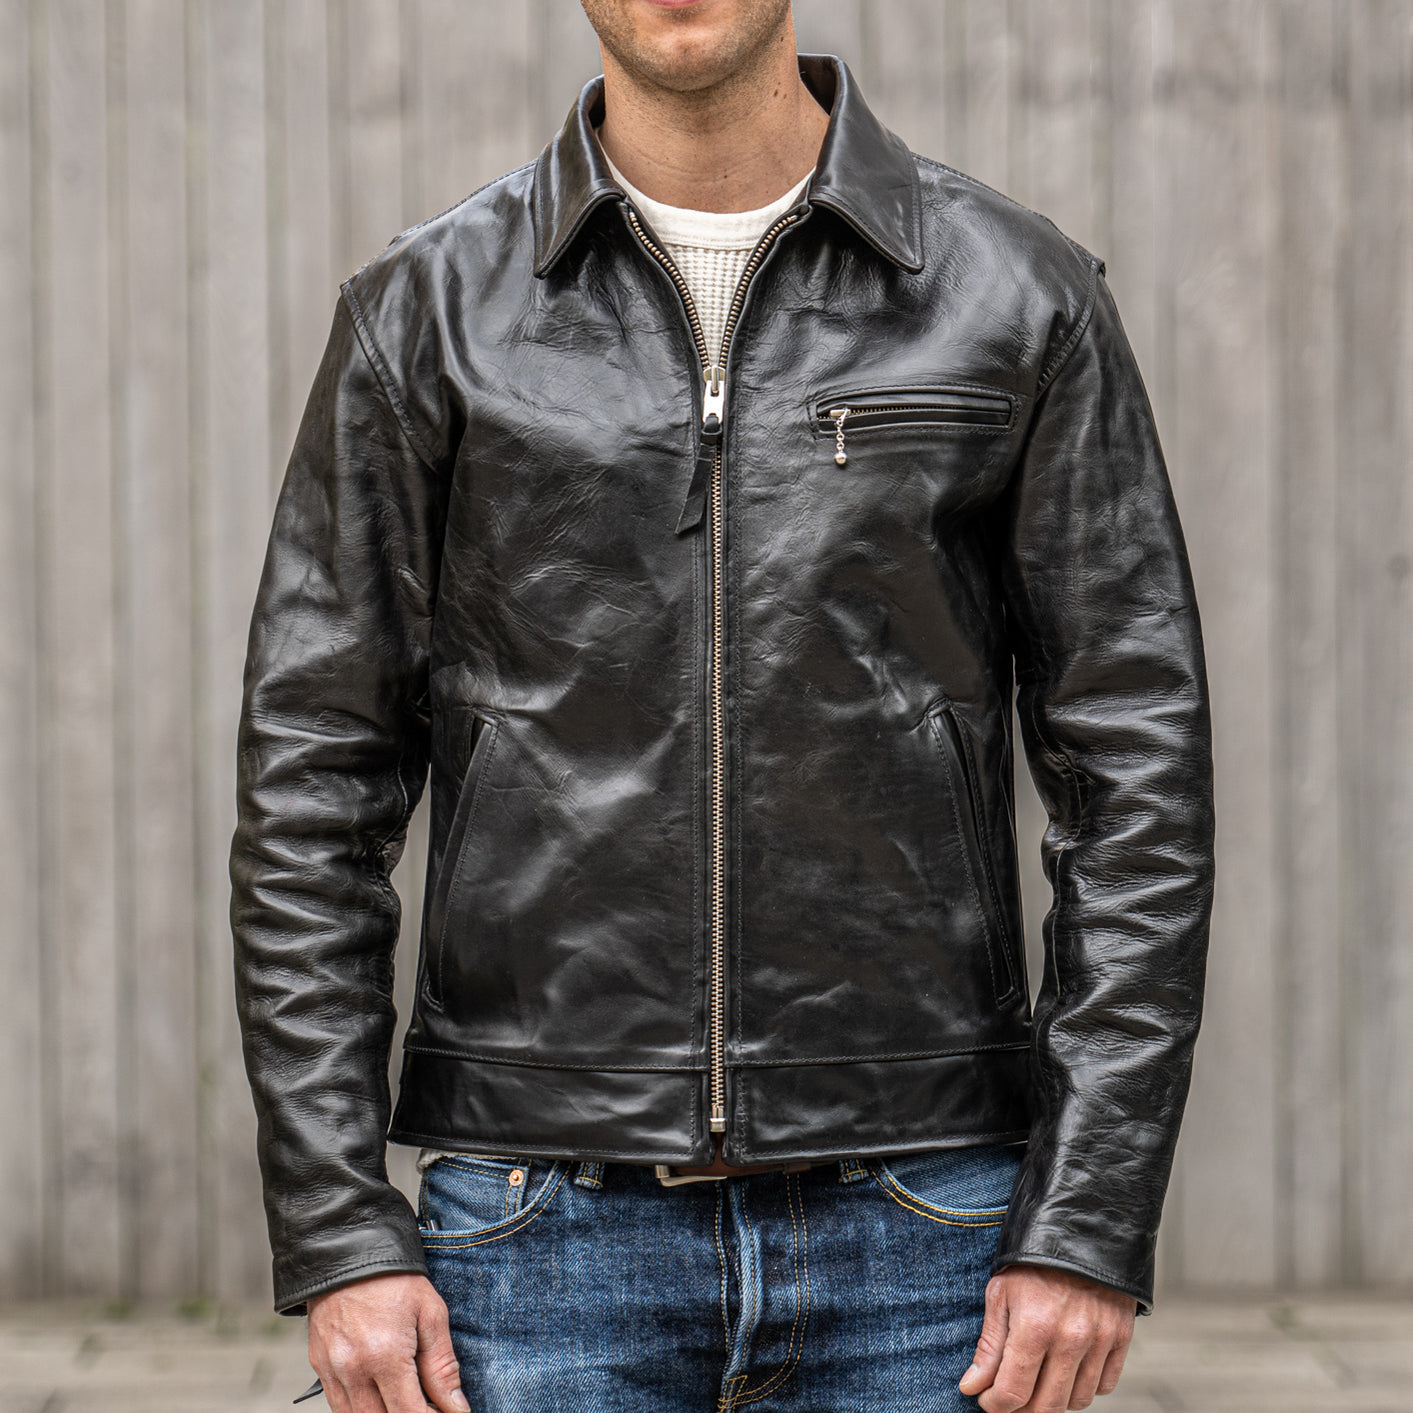 Simmons Bilt “Liberator” Leather Jacket – Black Clayton Monza Horsehid ...